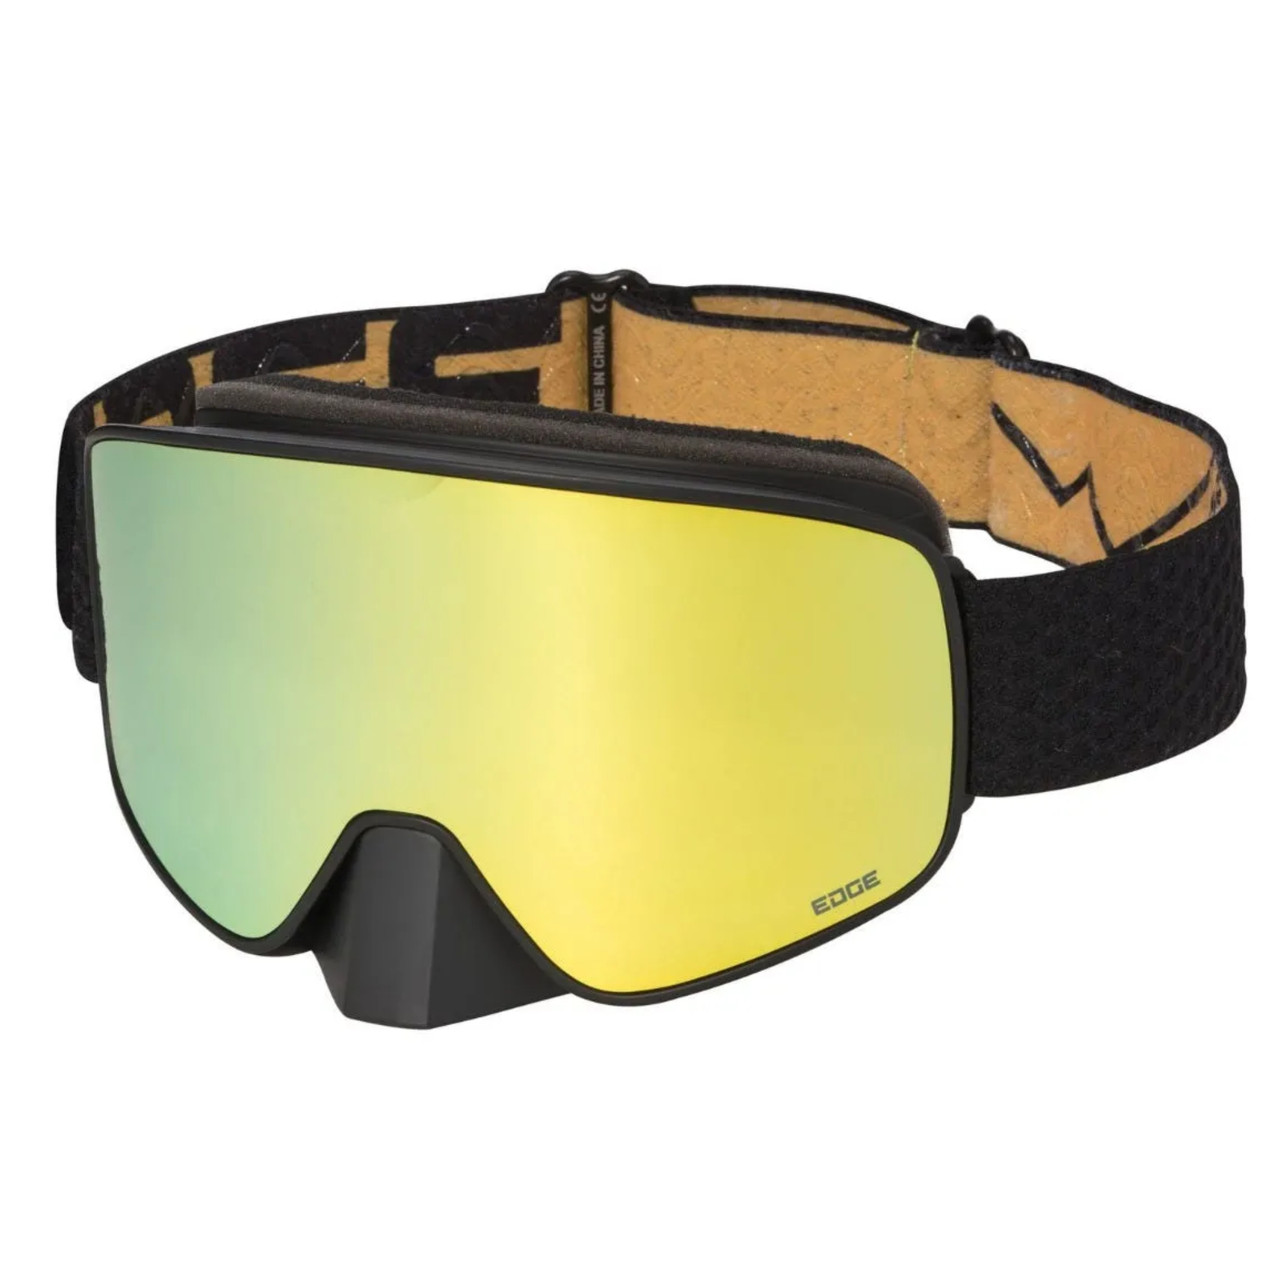 Ski-Doo New OEM Unisex One Size Yellow Edge Goggles, 4487240010